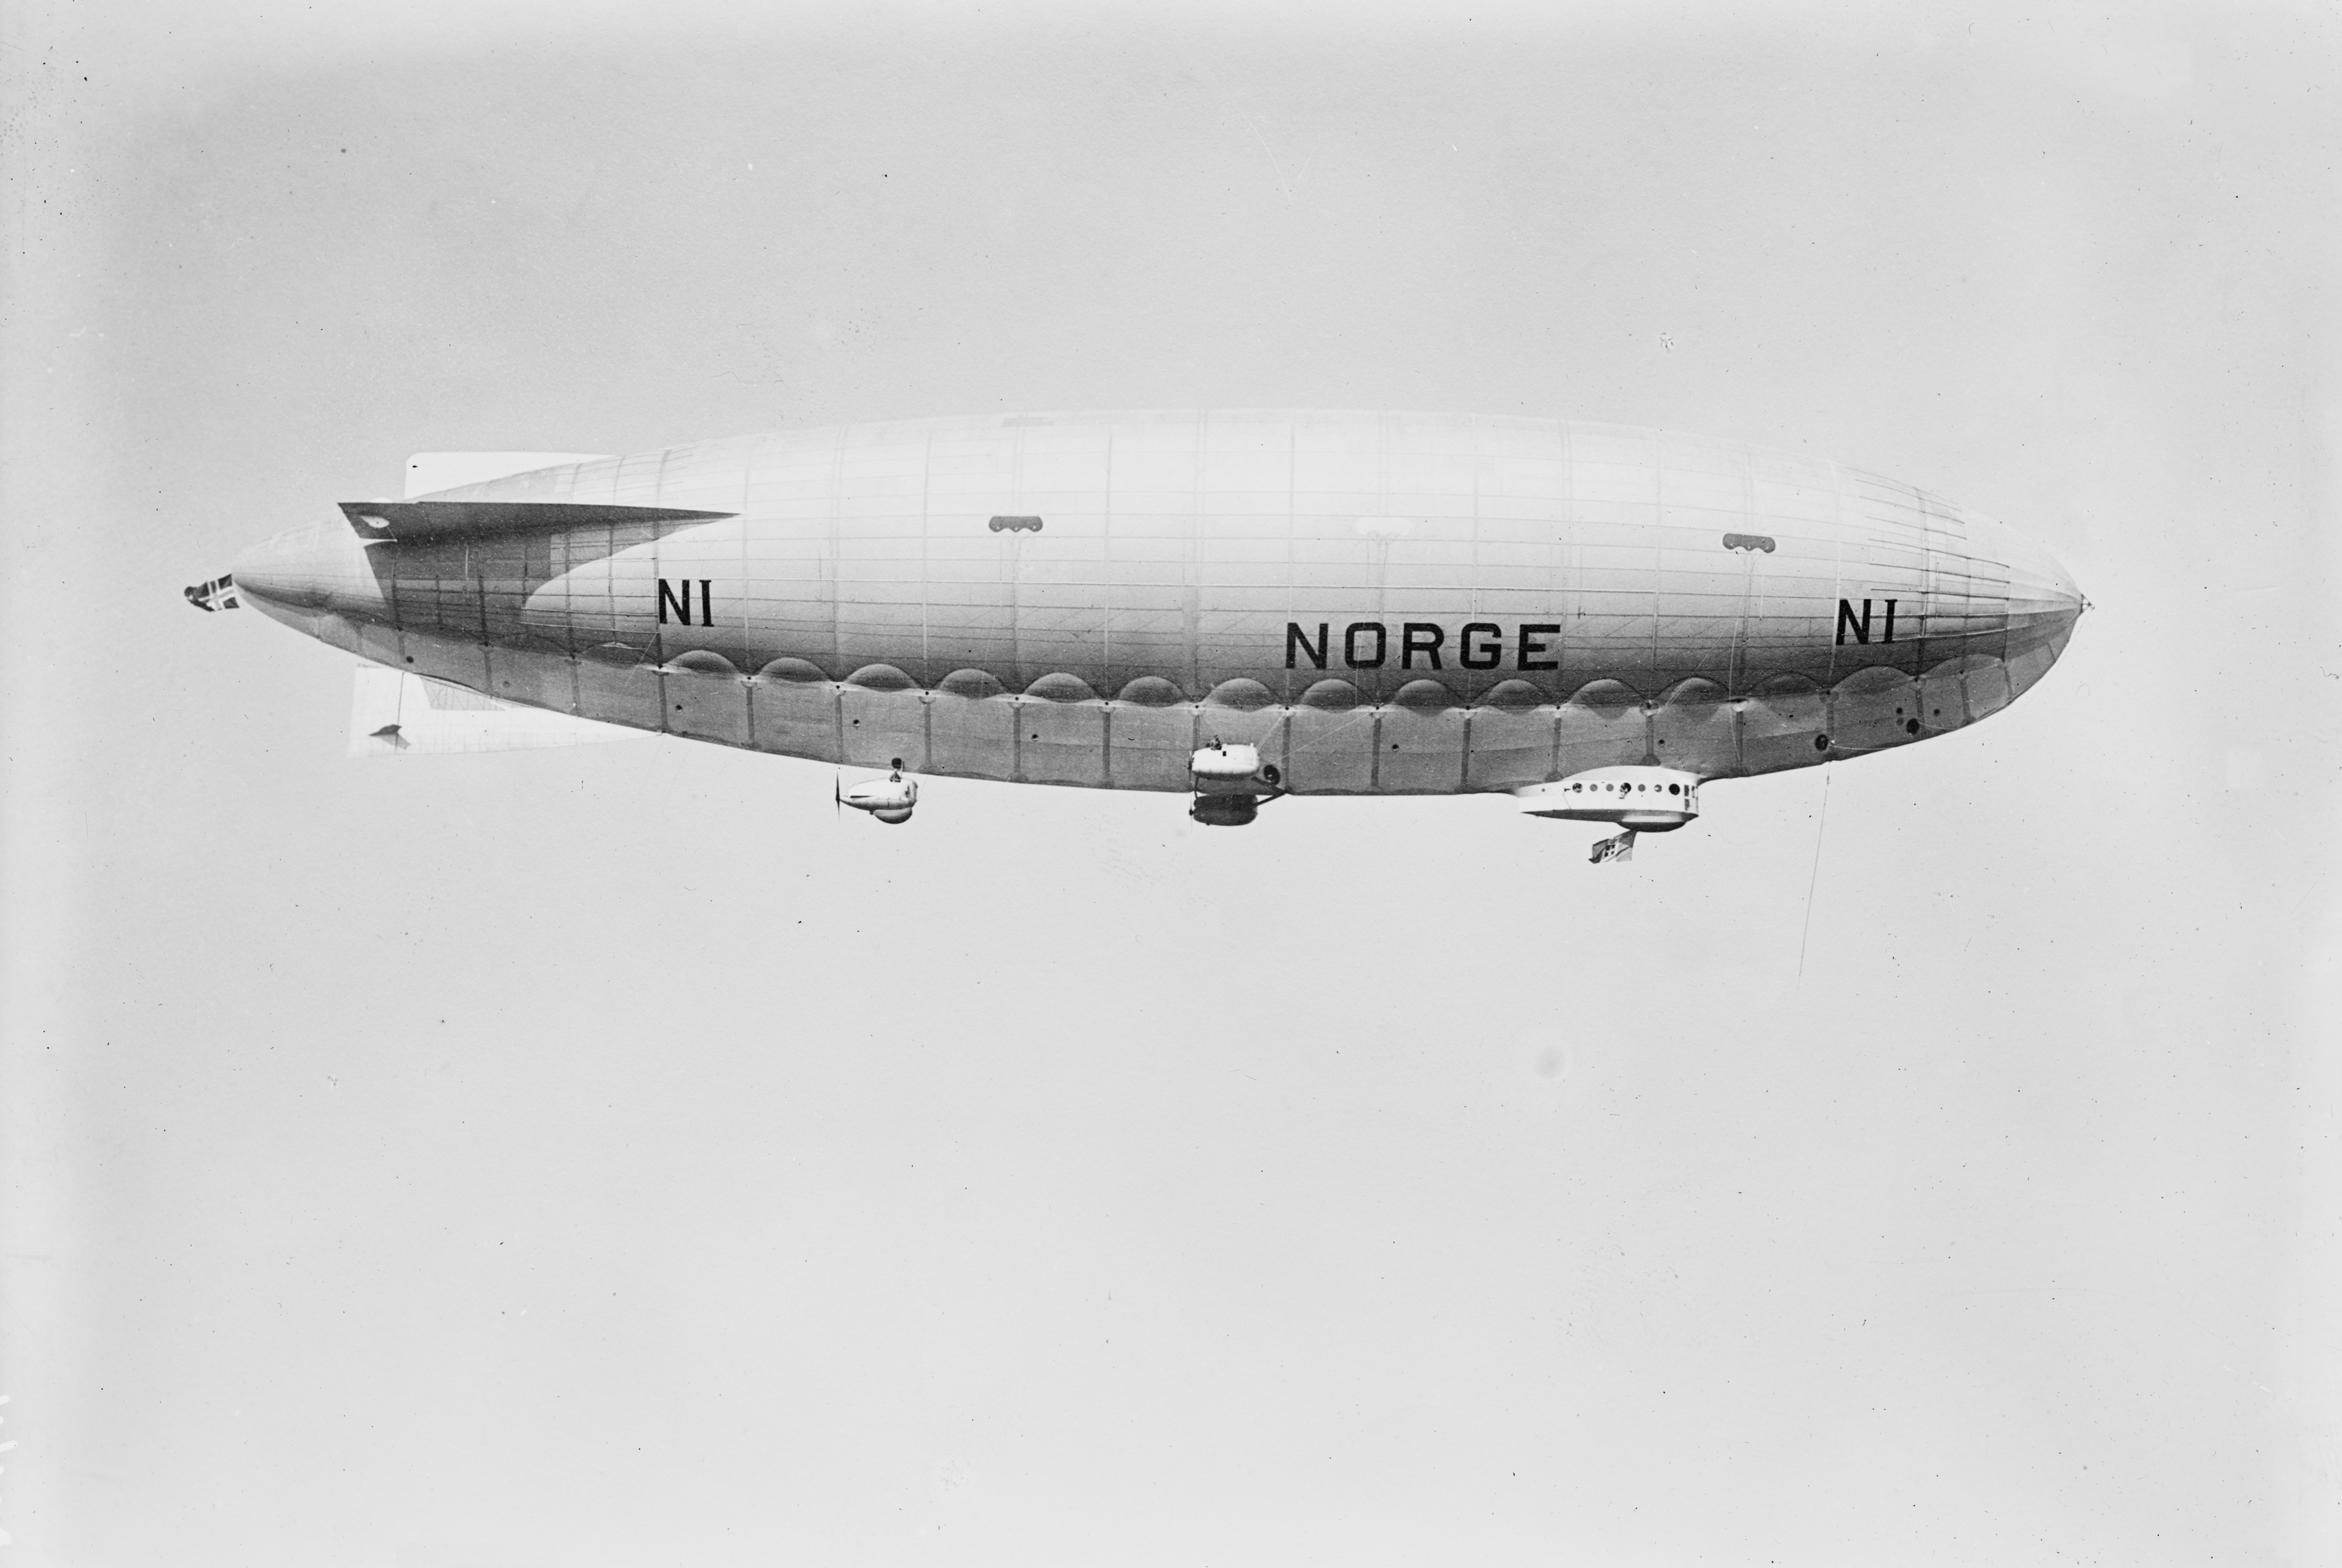 Airship Norge, 1926 (Bain News Service)